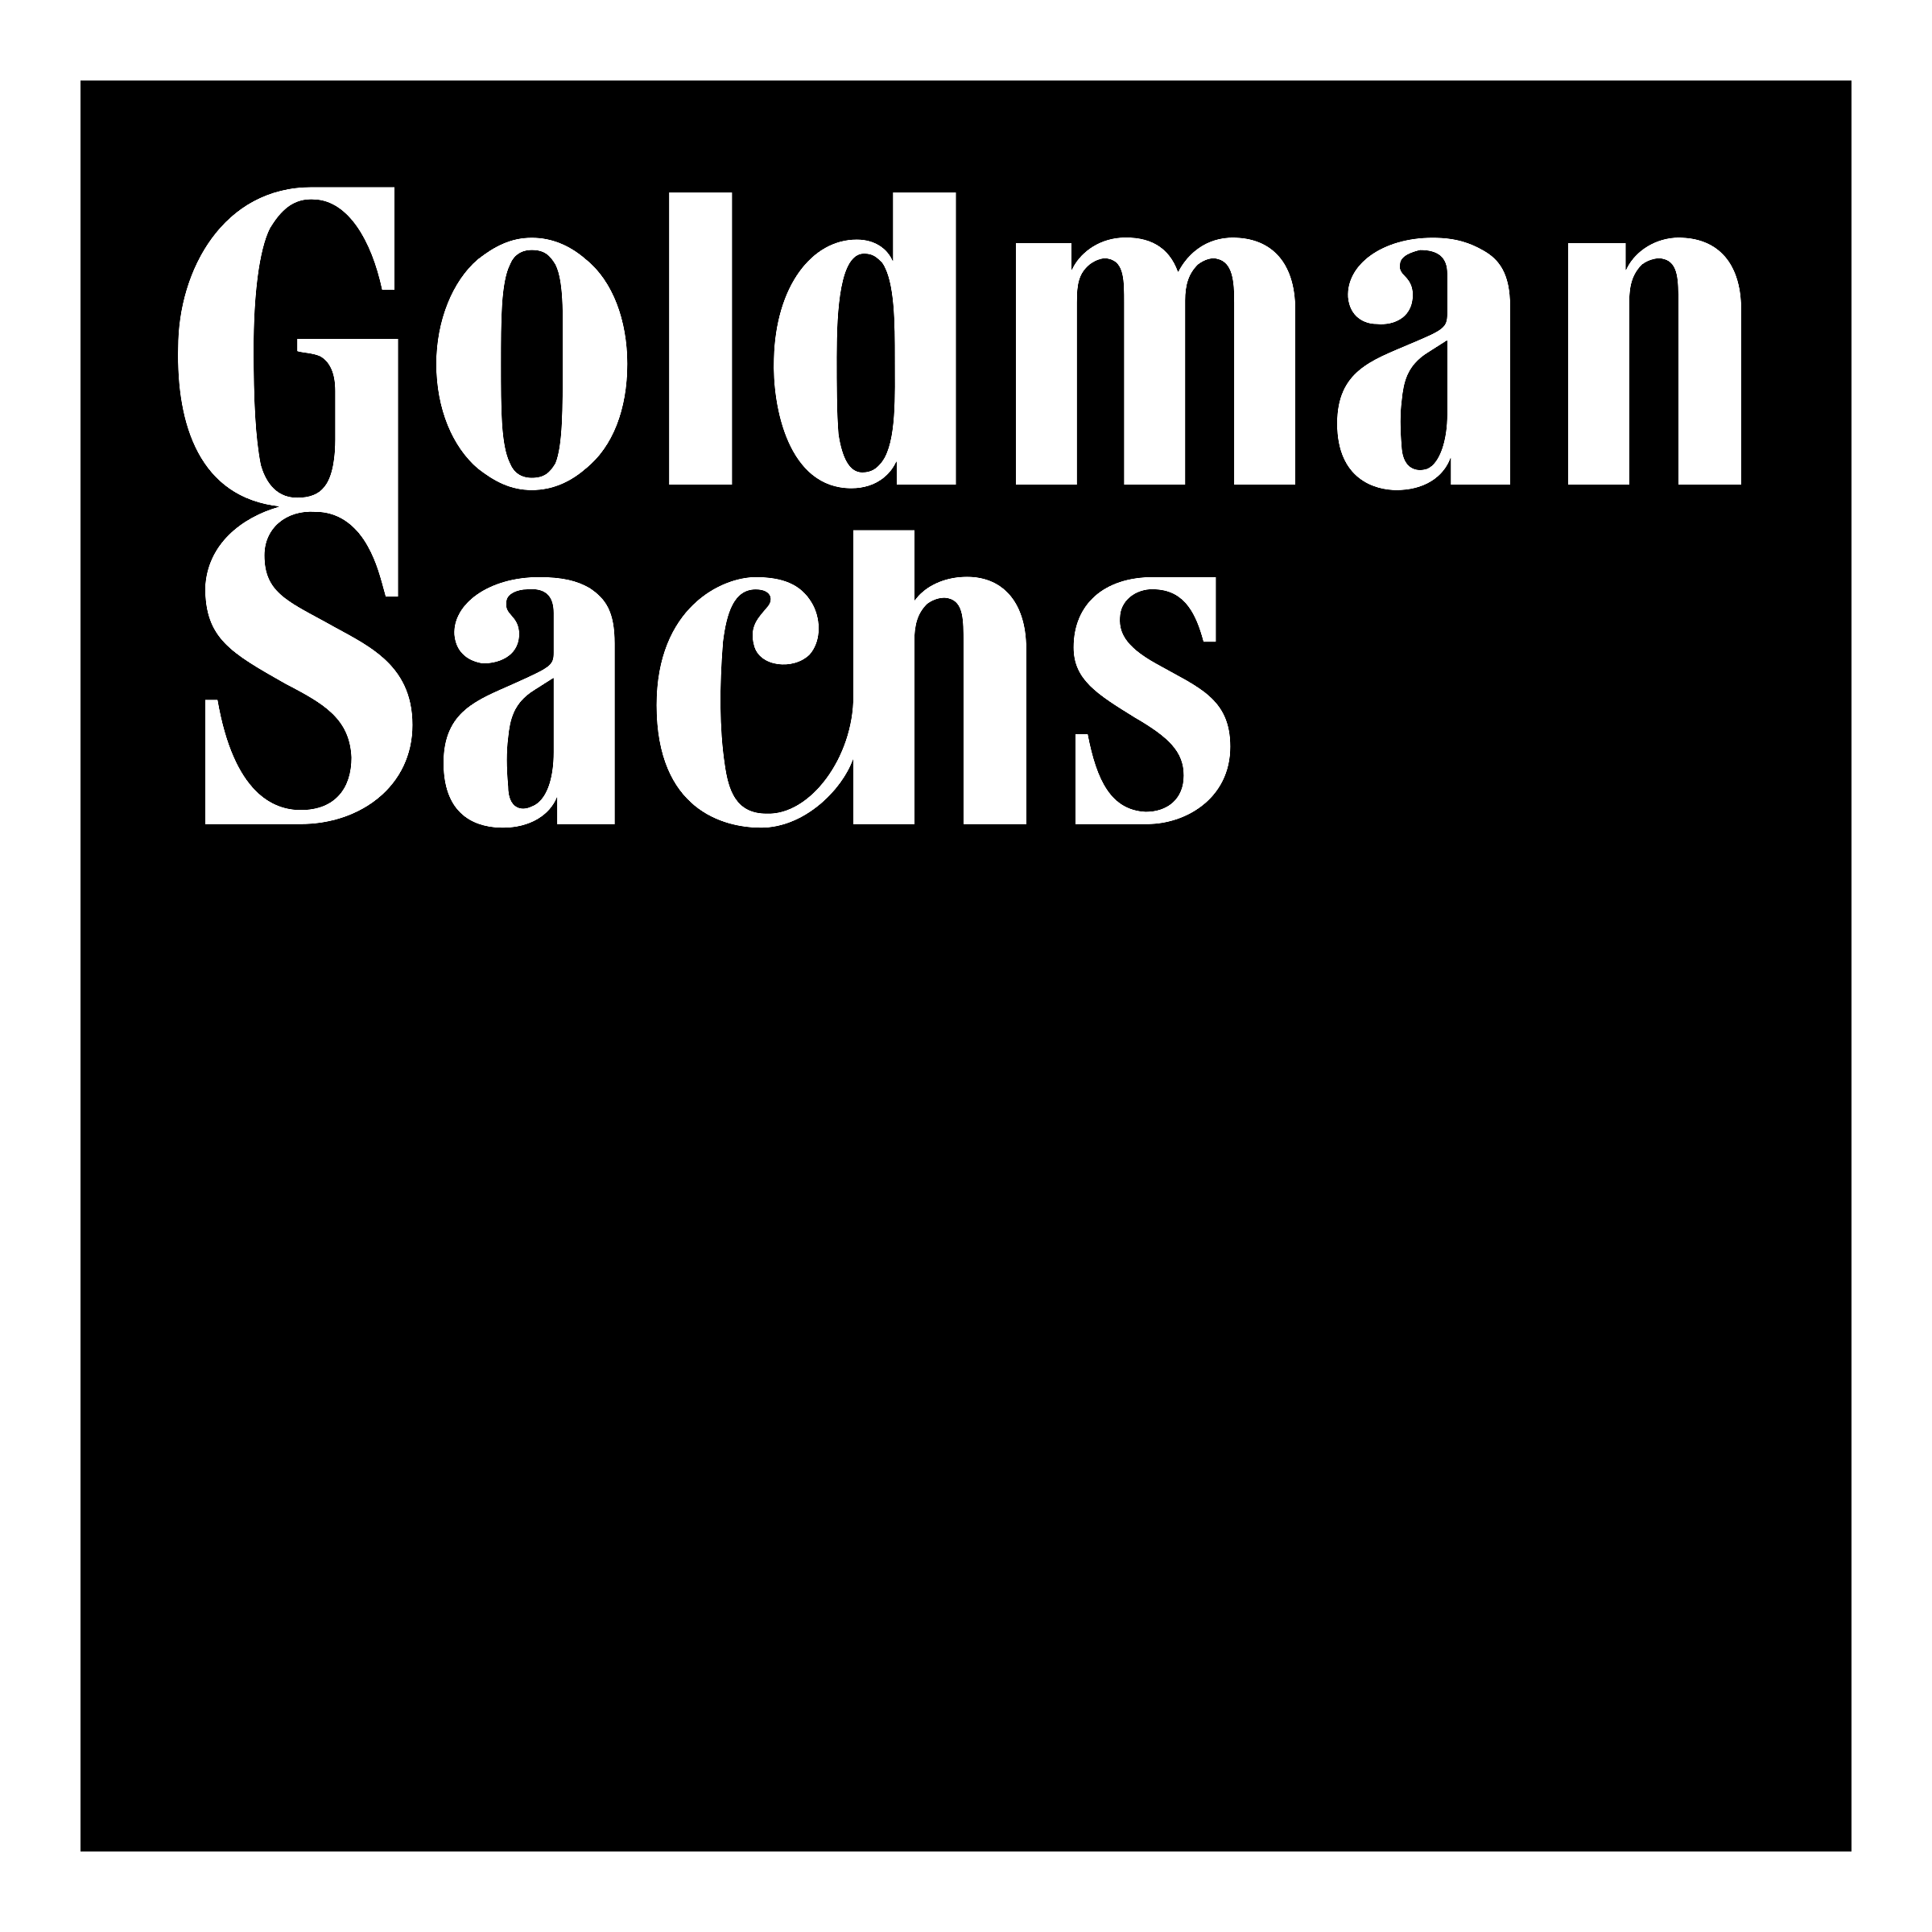 goldman-sachs-logo-black-and-white.png